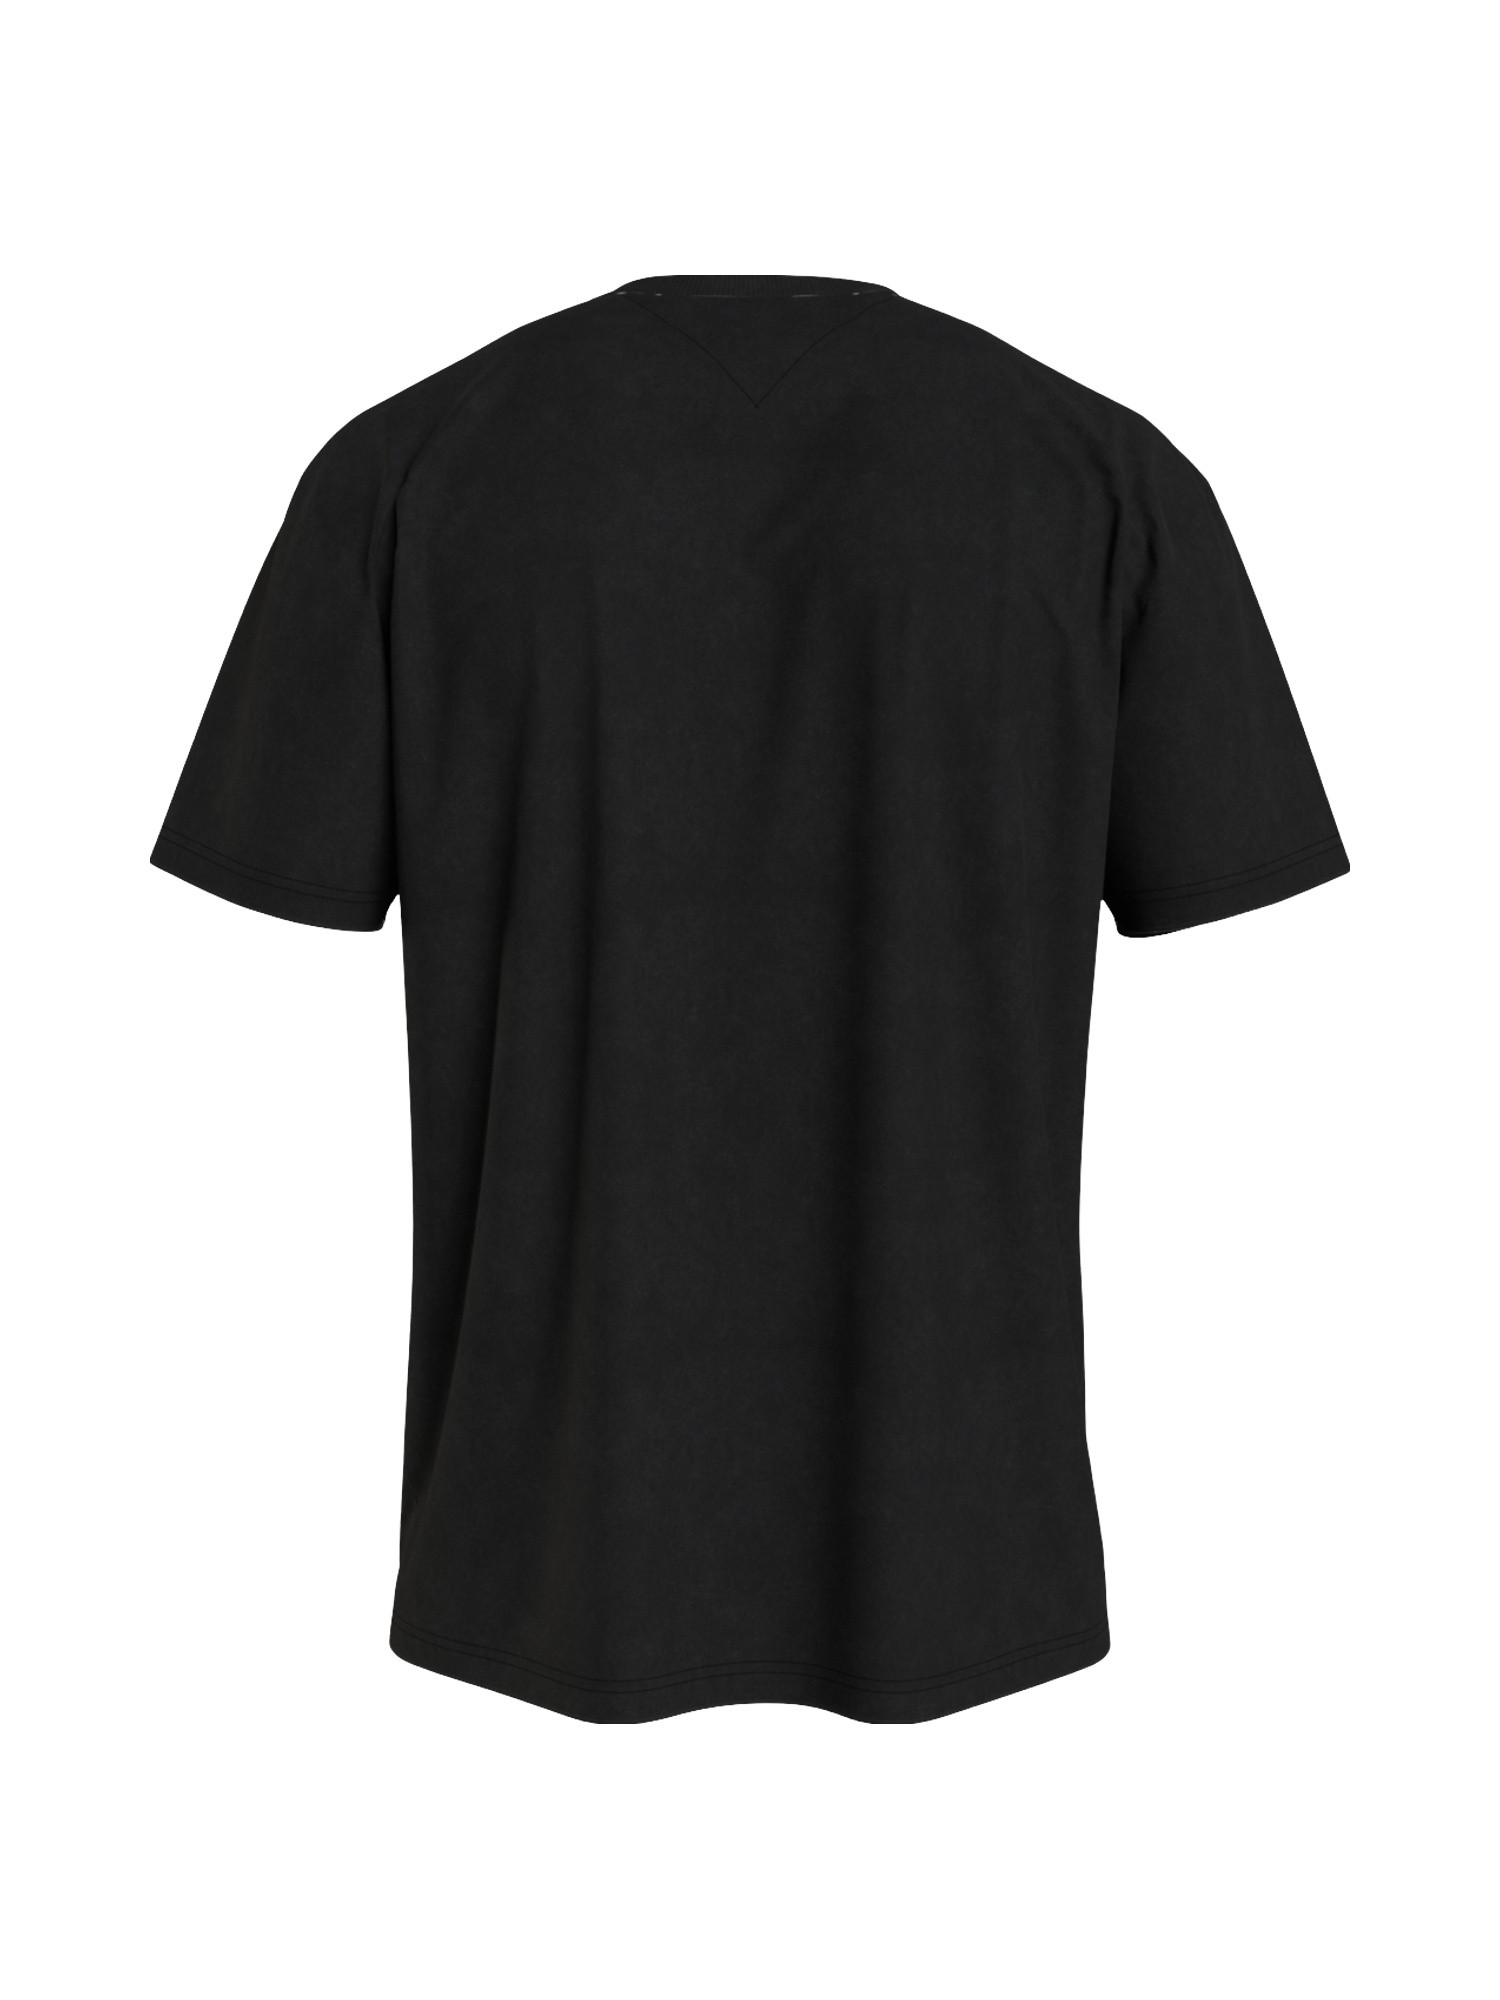 T-shirt with logo, Black, large image number 1